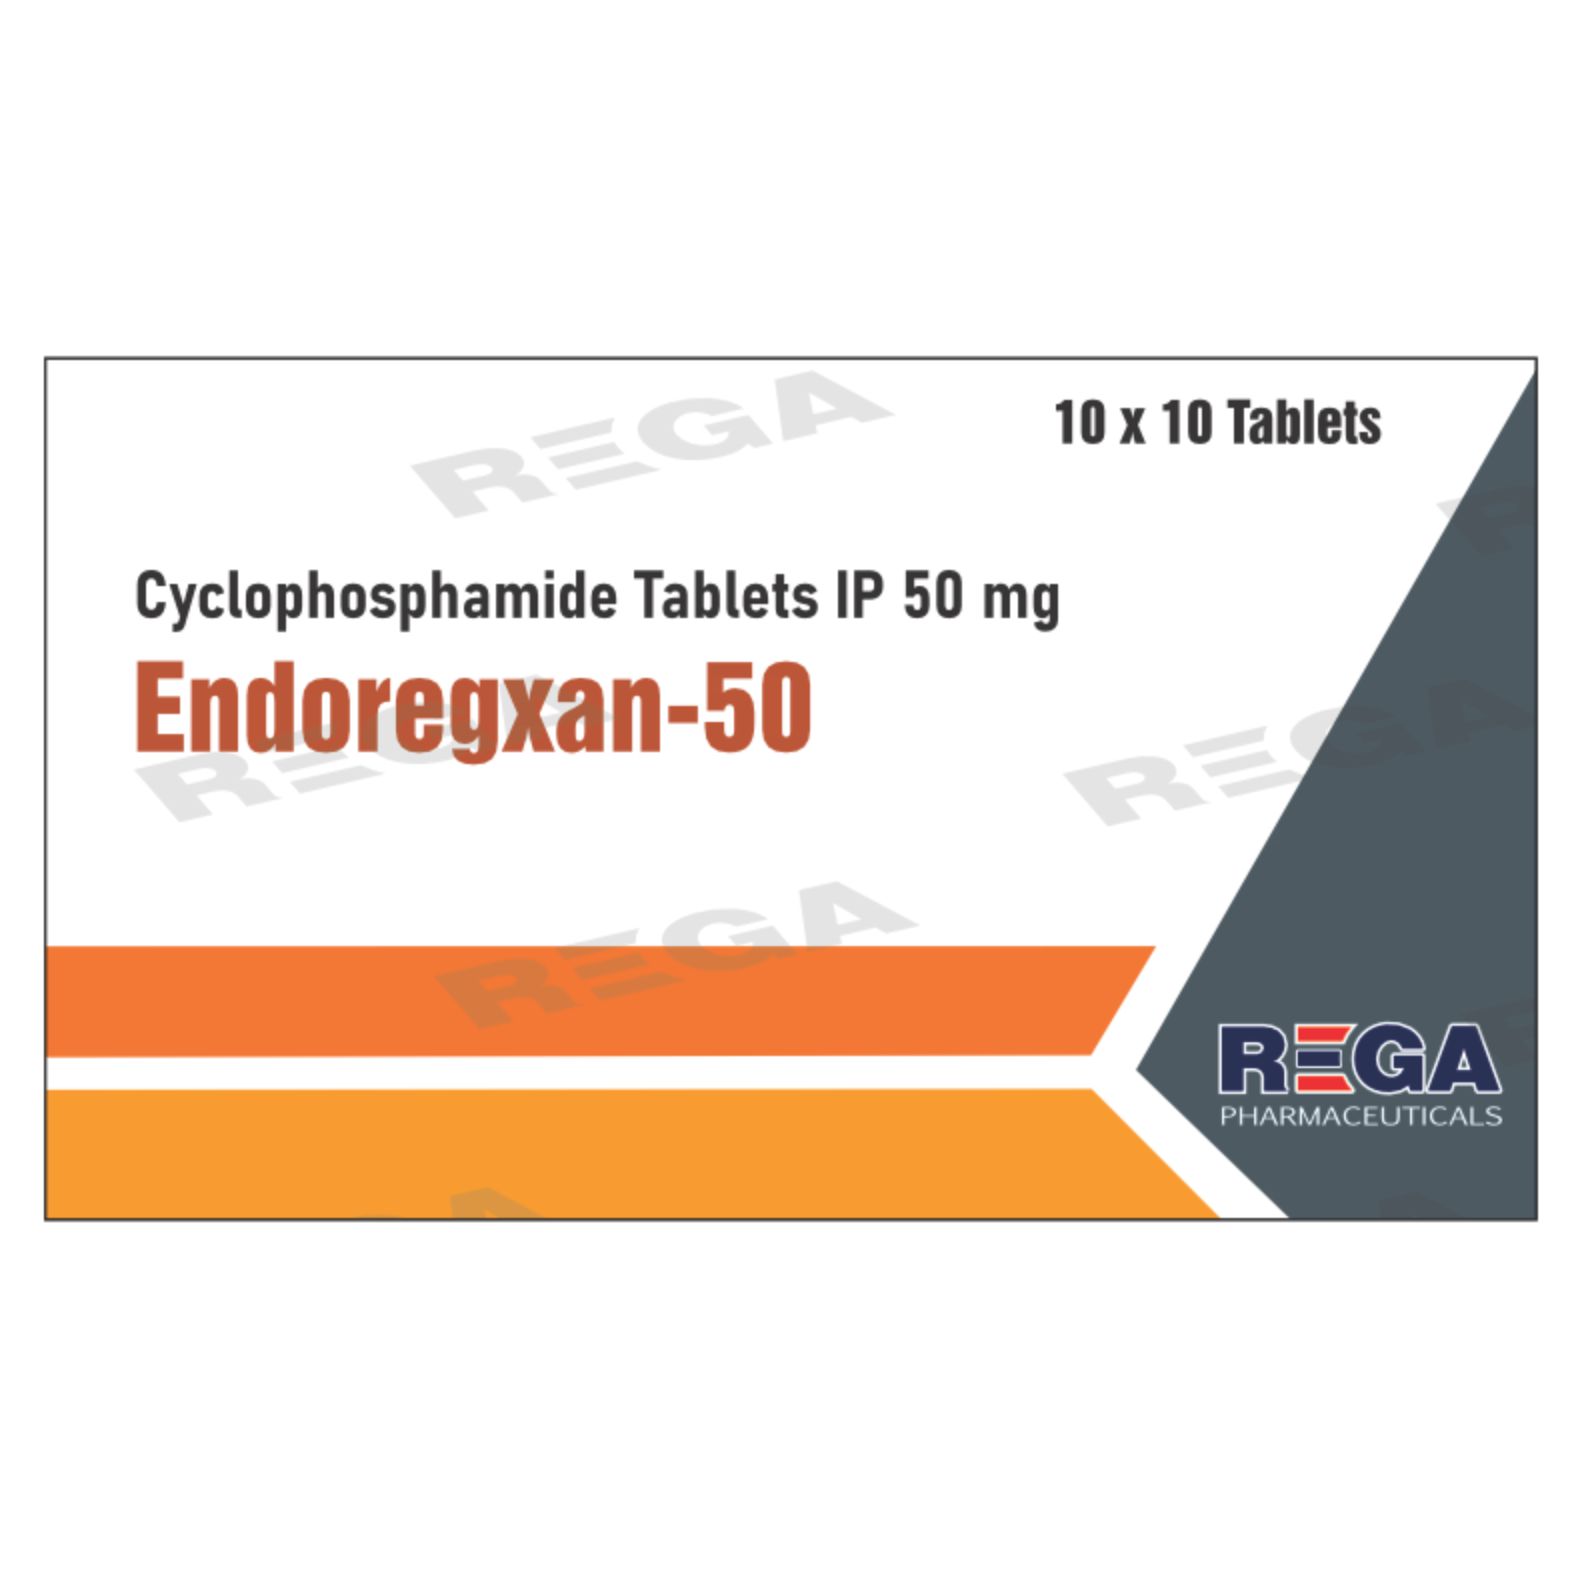 Cyclophosphamide Tablets 50 mg